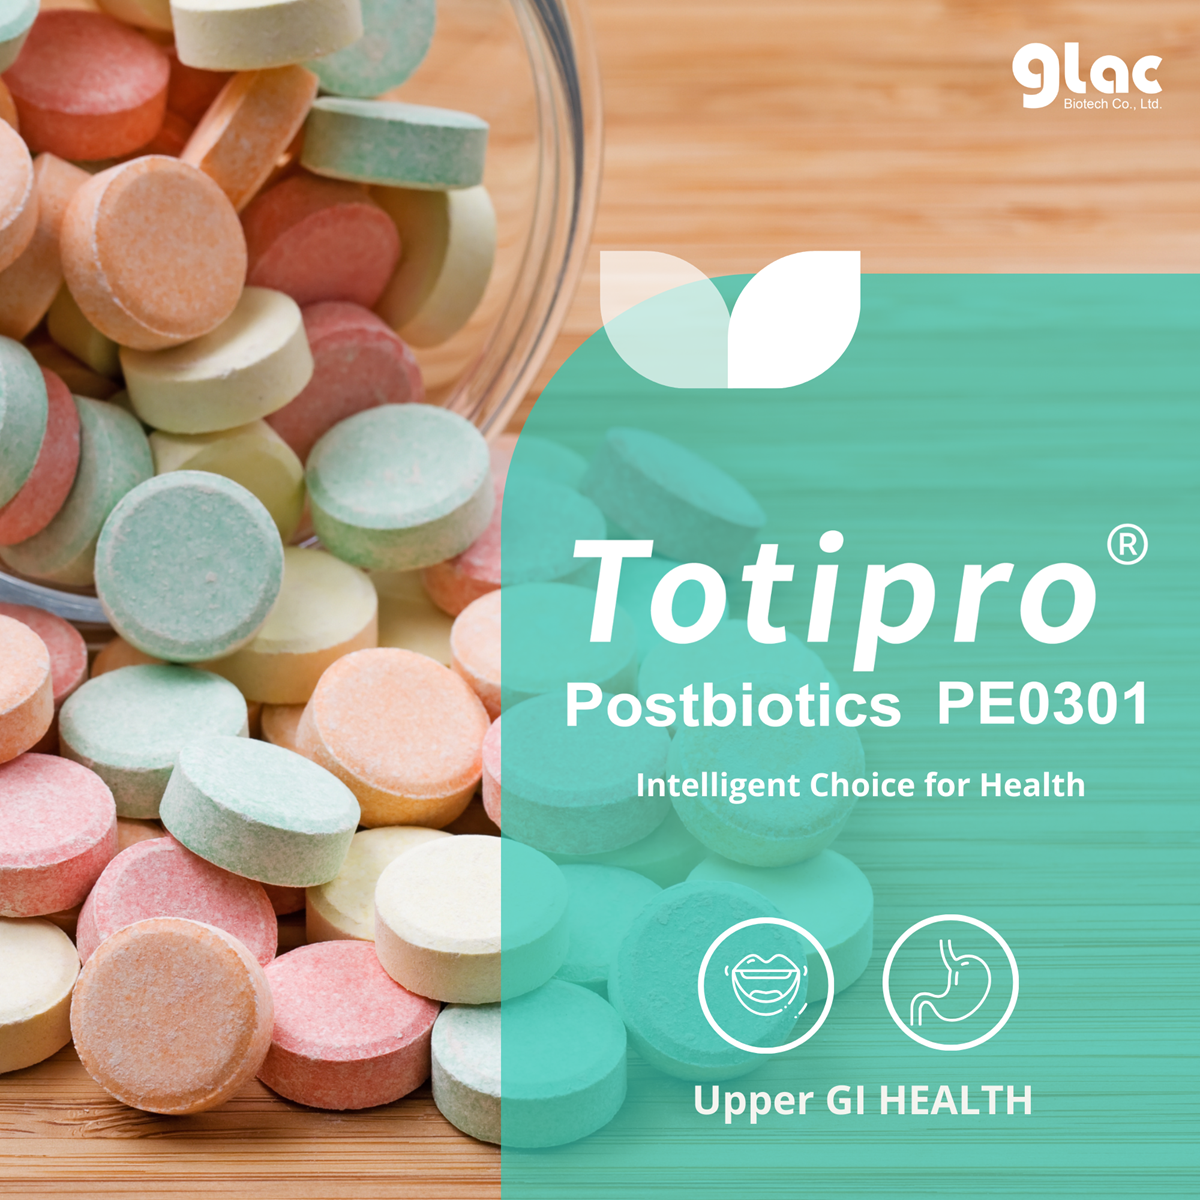 Totipro®Postbiotics PE0301 for Oral Care Applications